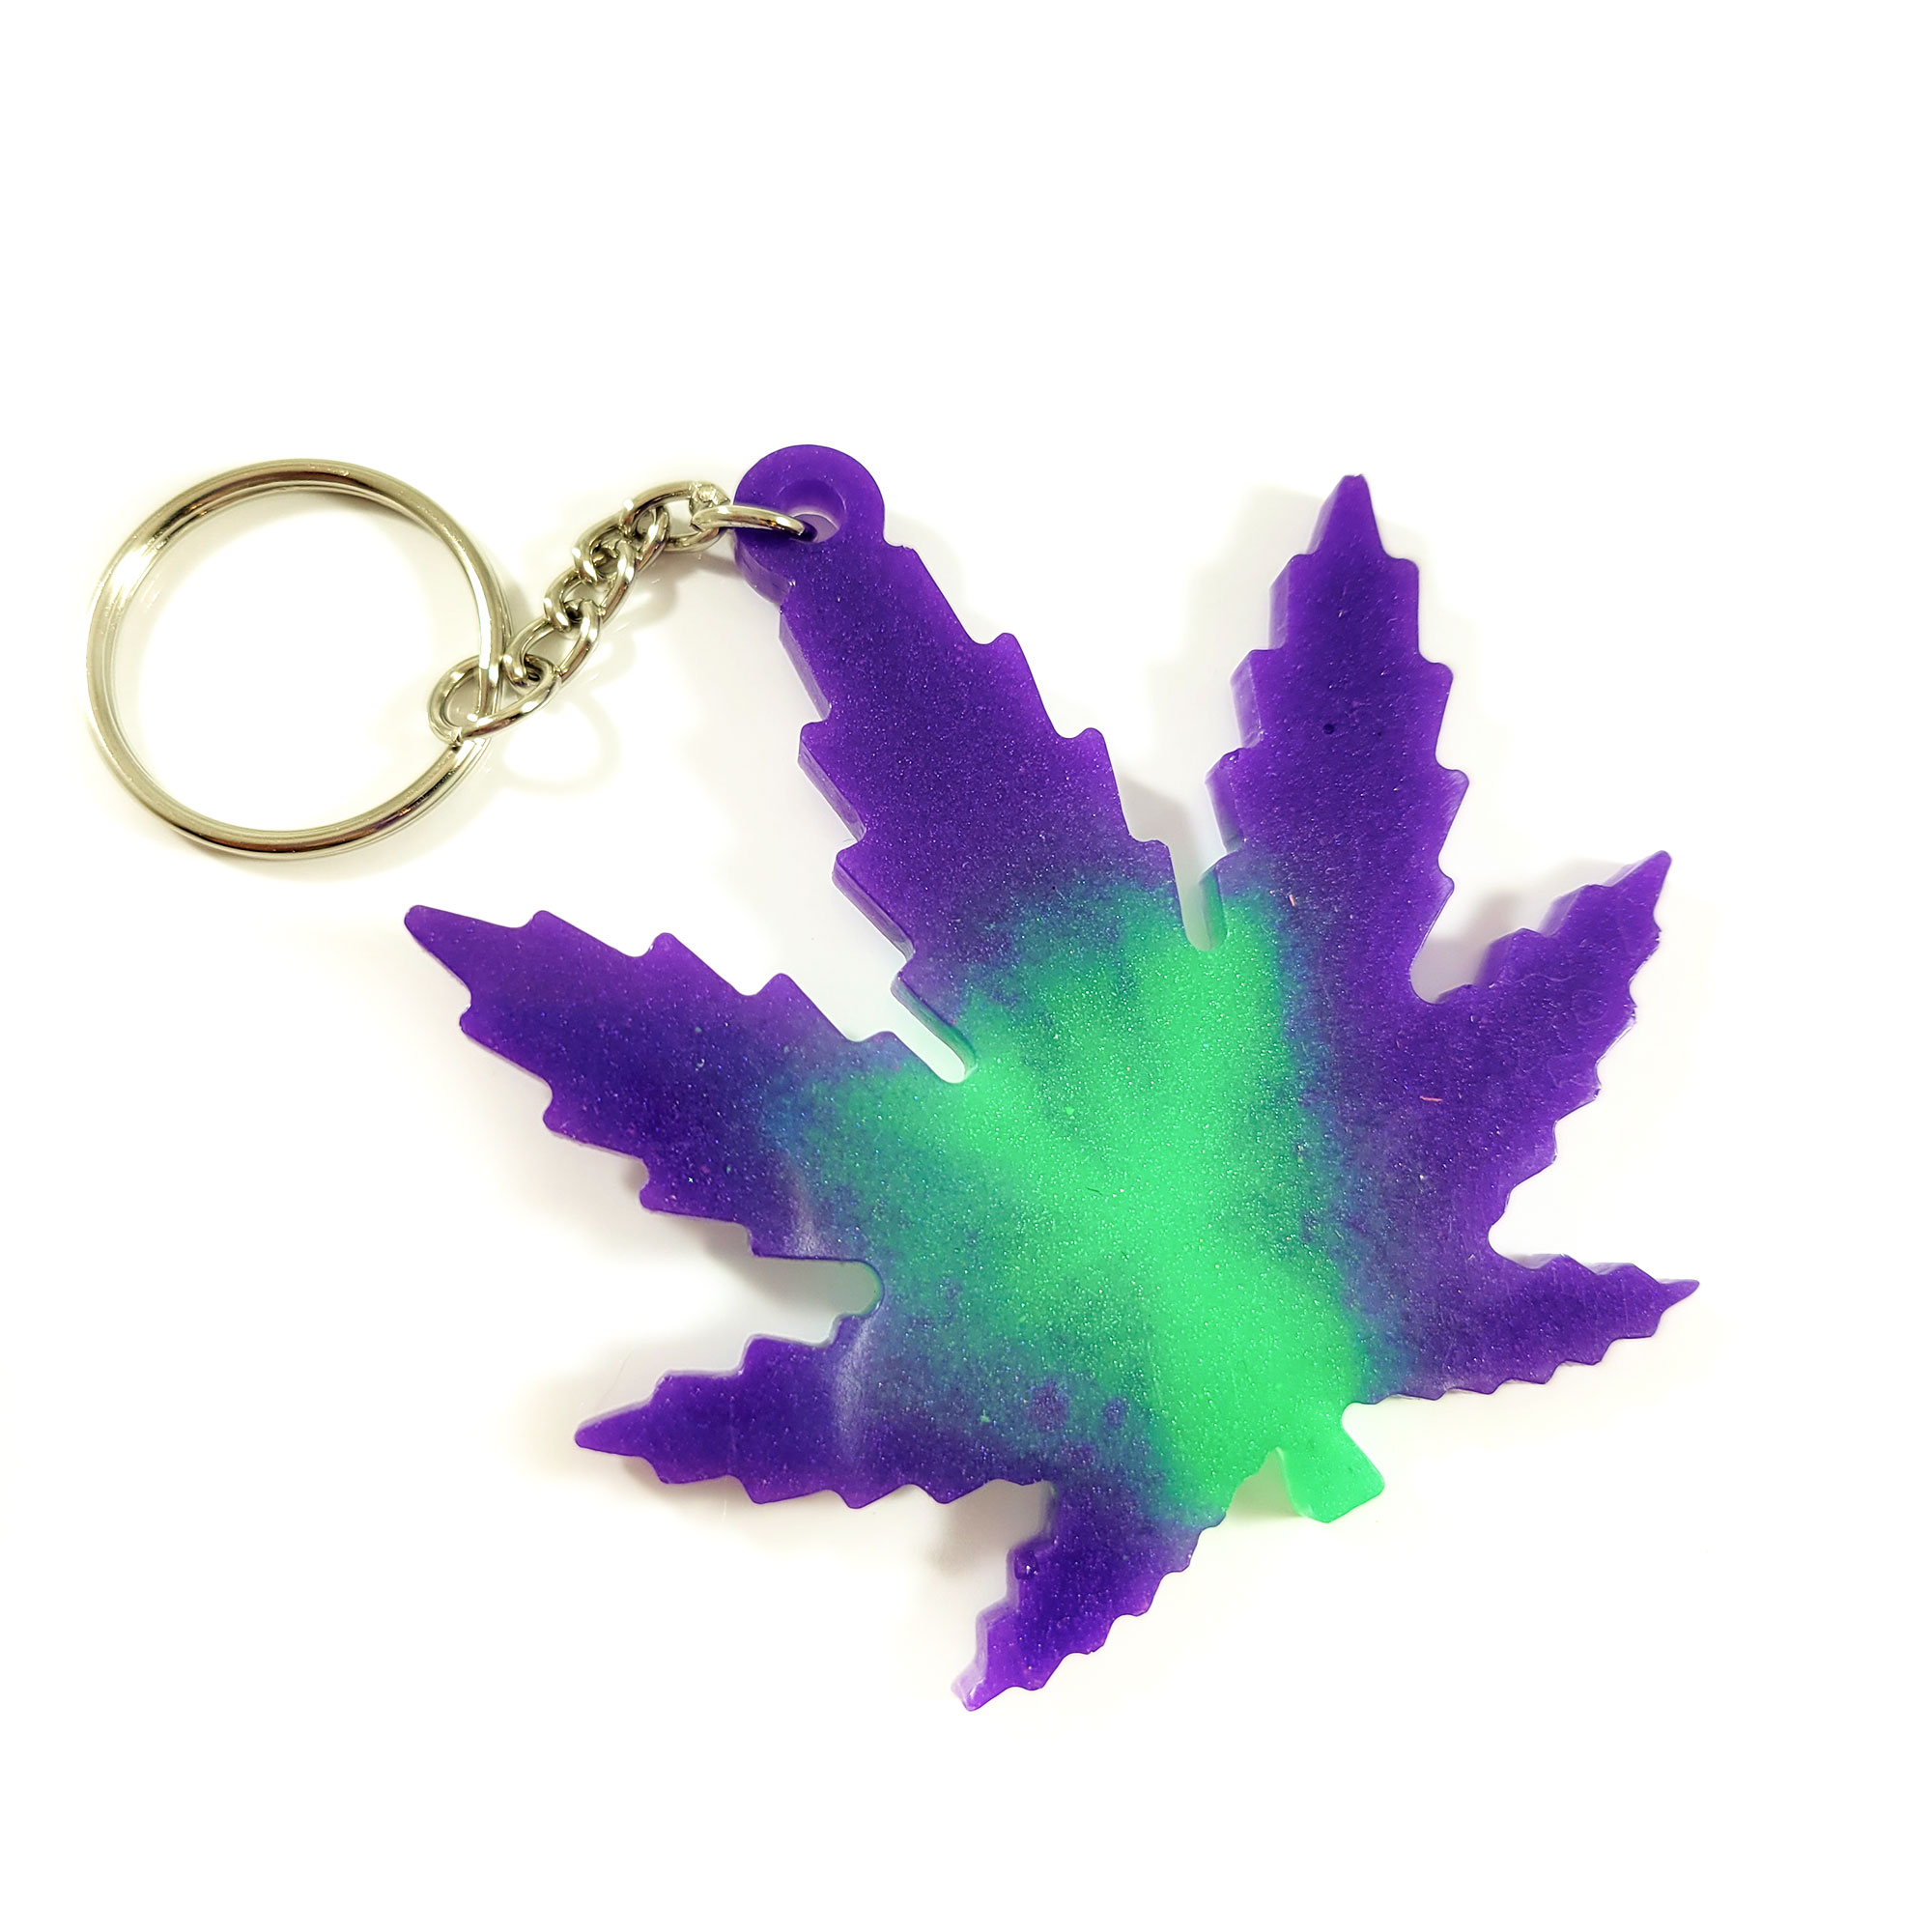 Psychadelic Leaf Keychains by Wilde Designs